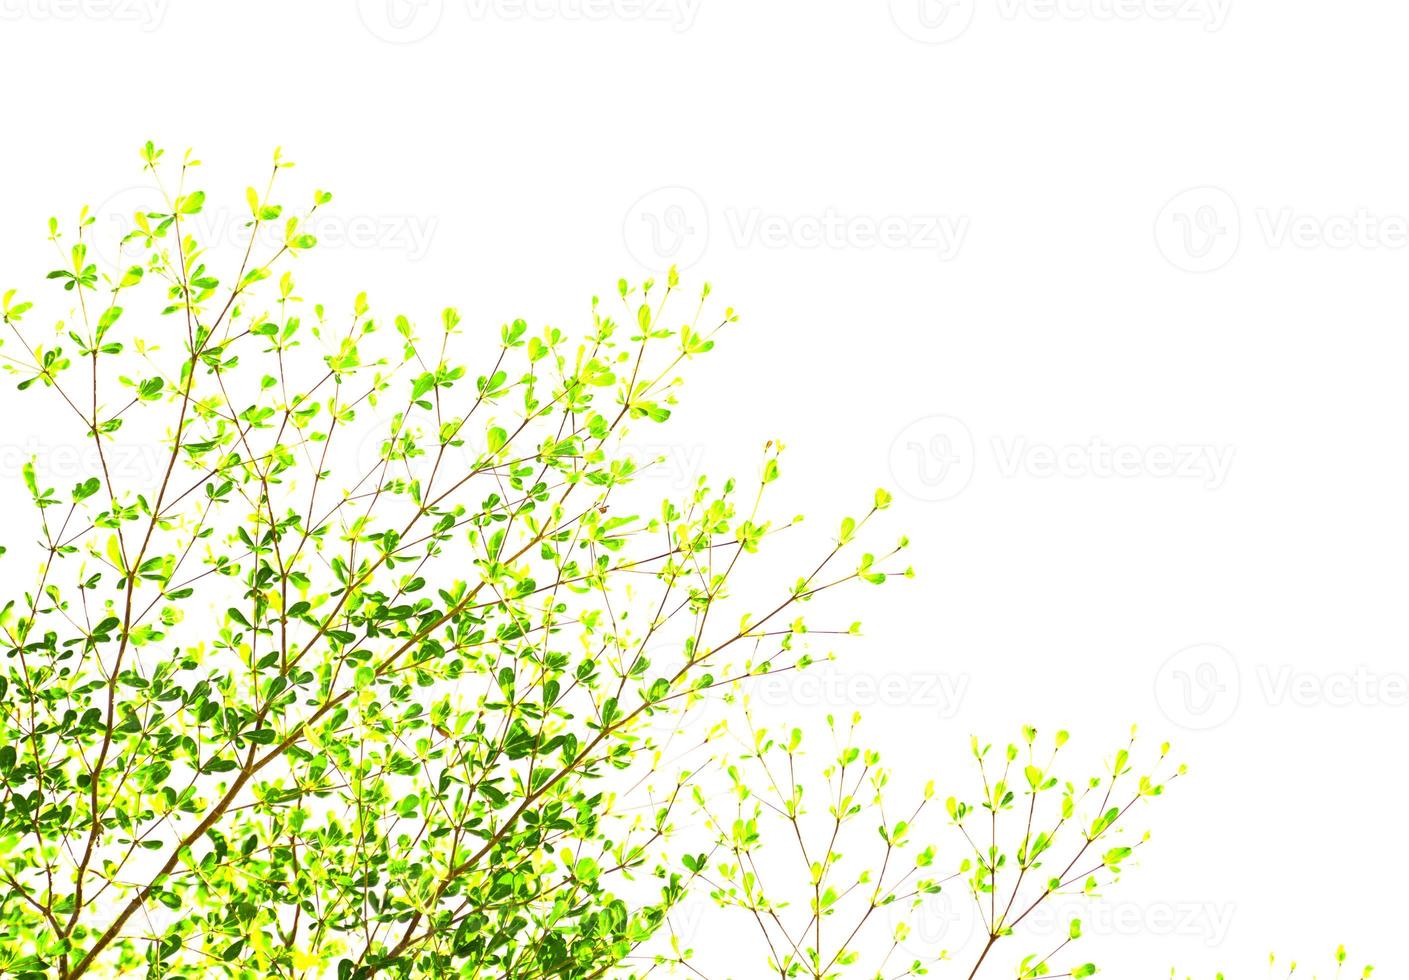 ramos verdes isolados no fundo branco. foco suave e seletivo. foto